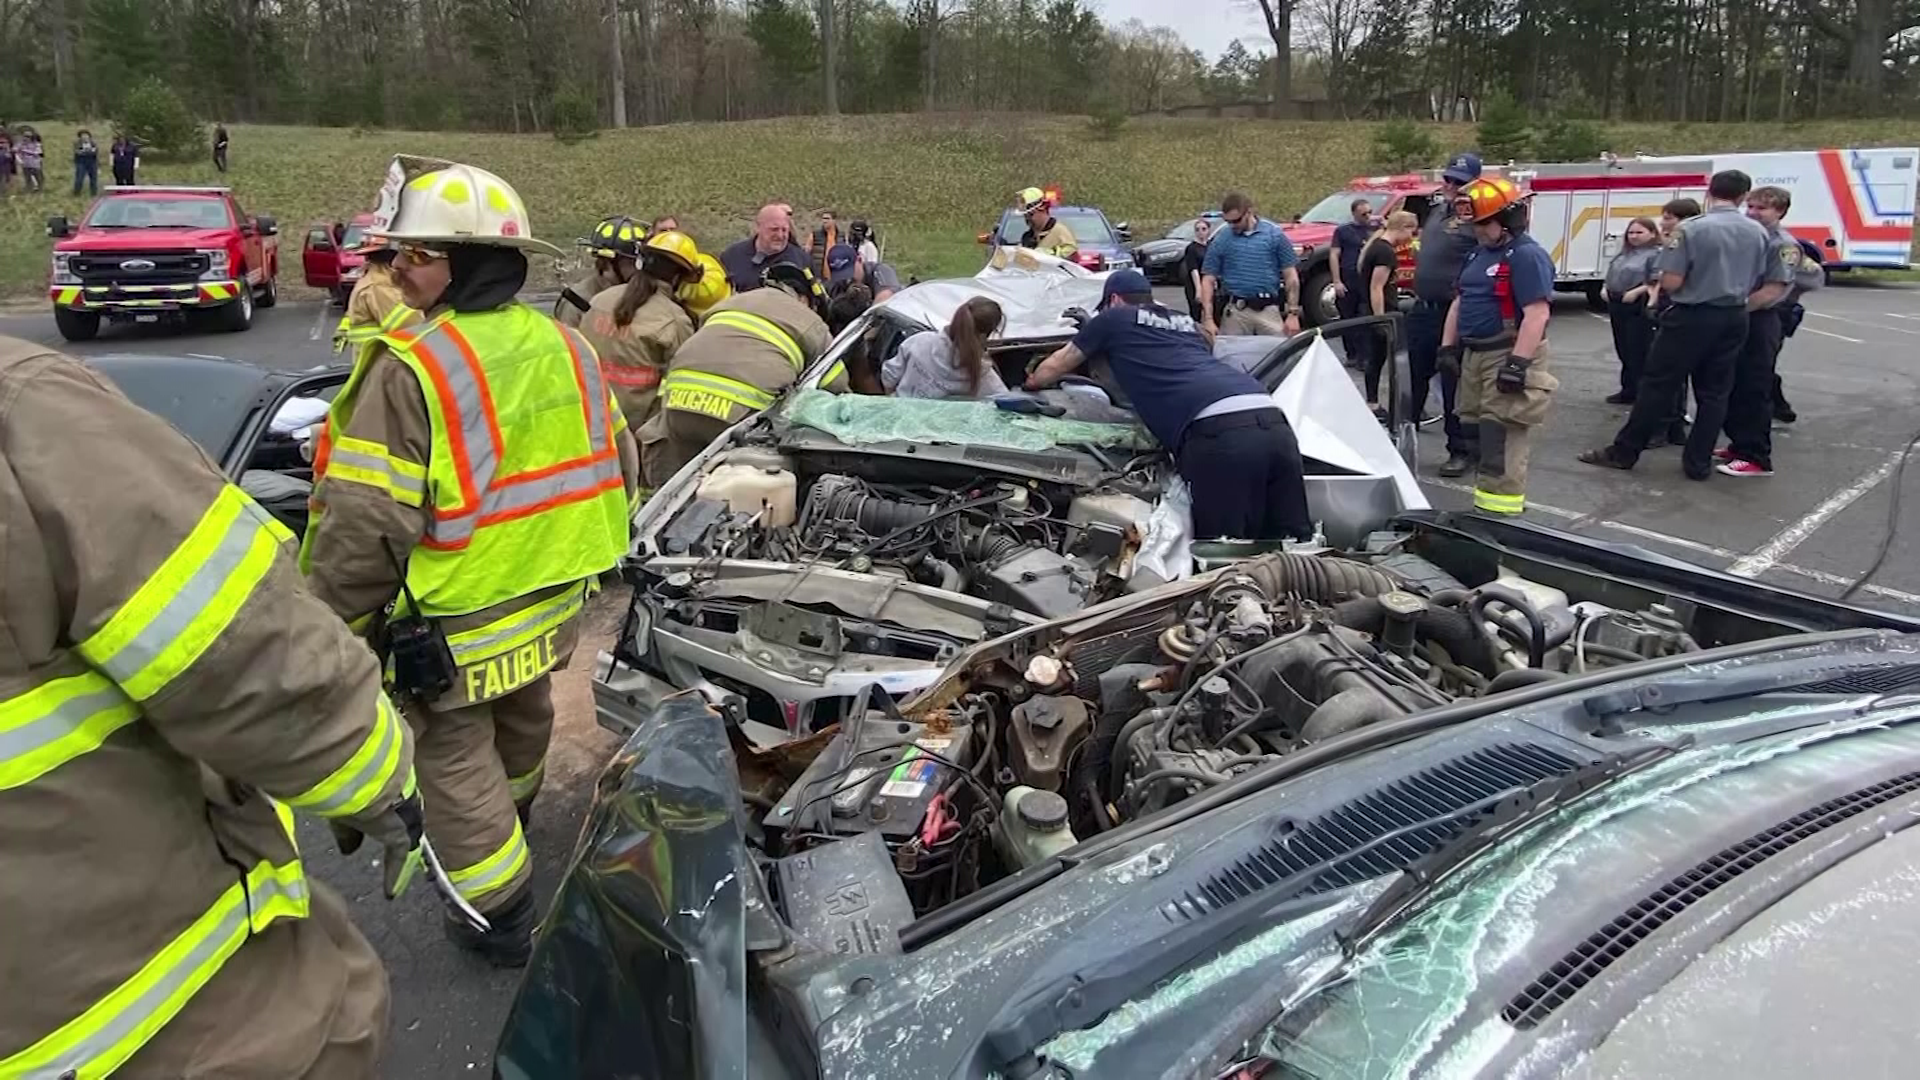 Wexford-Missaukee CTC honored for raising awareness with mock crash scene